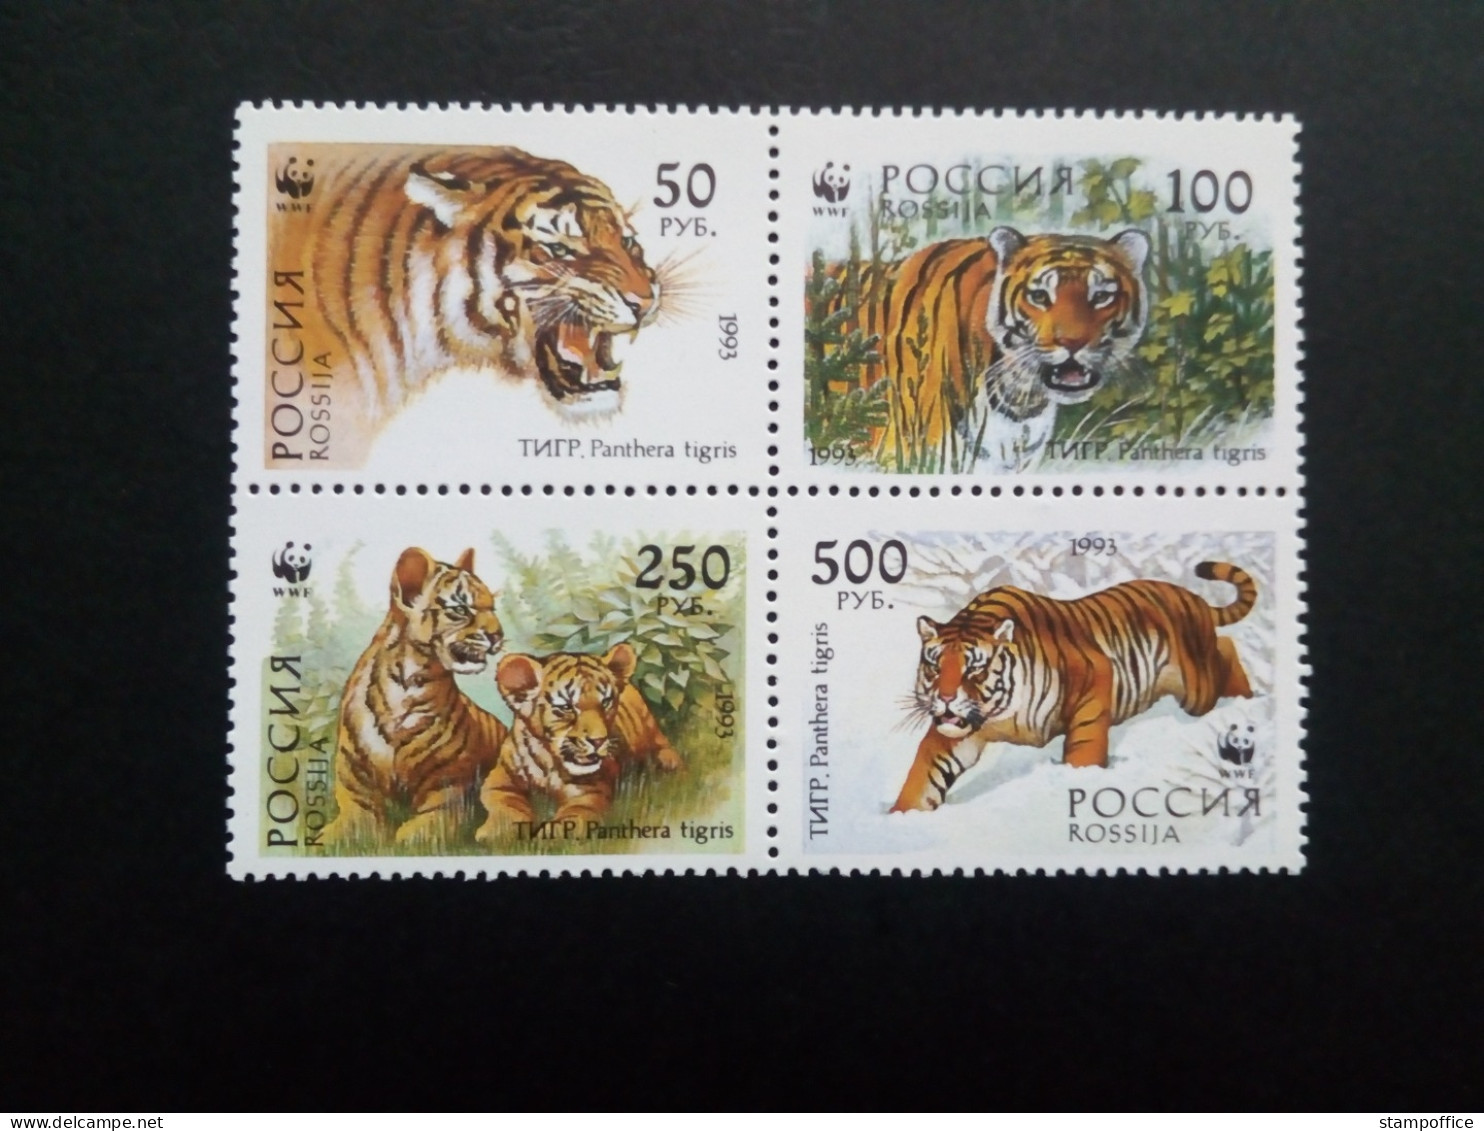 RUSSLAND MI-NR. 343-346 POSTFRISCH(MINT) SIBIRISCHER TIGER WWF 1993 - Big Cats (cats Of Prey)